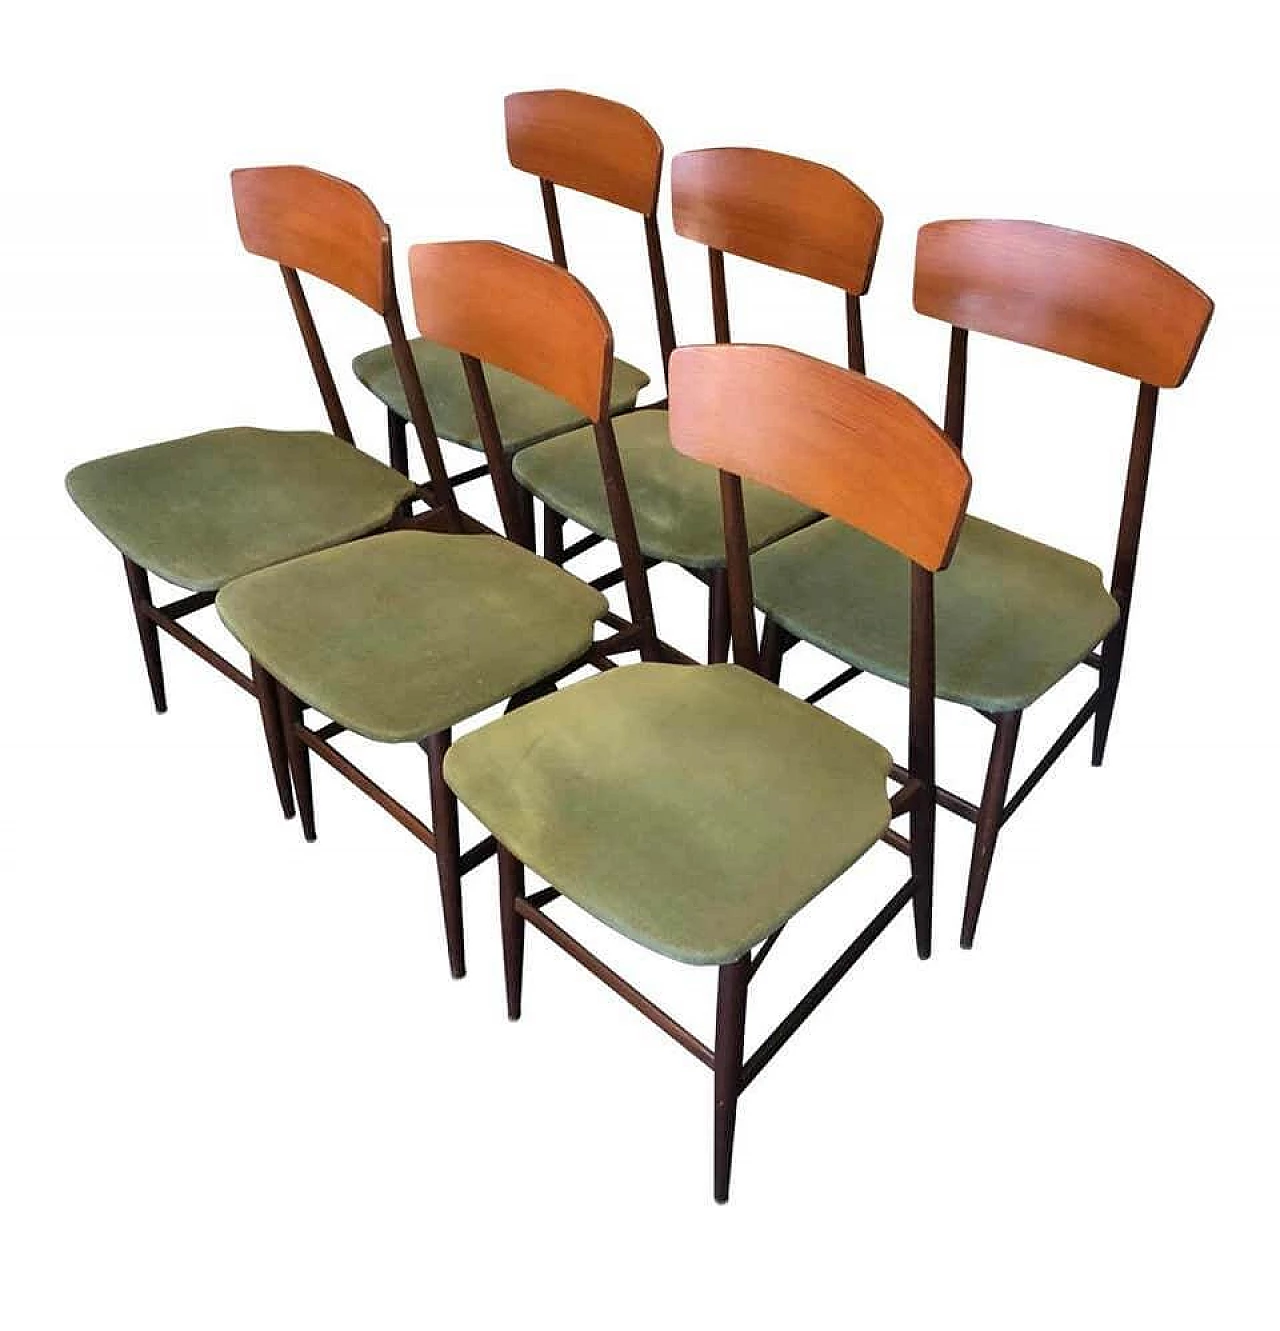 6 Dining chairs by Silvio Cavatorta, 1950s 1138335